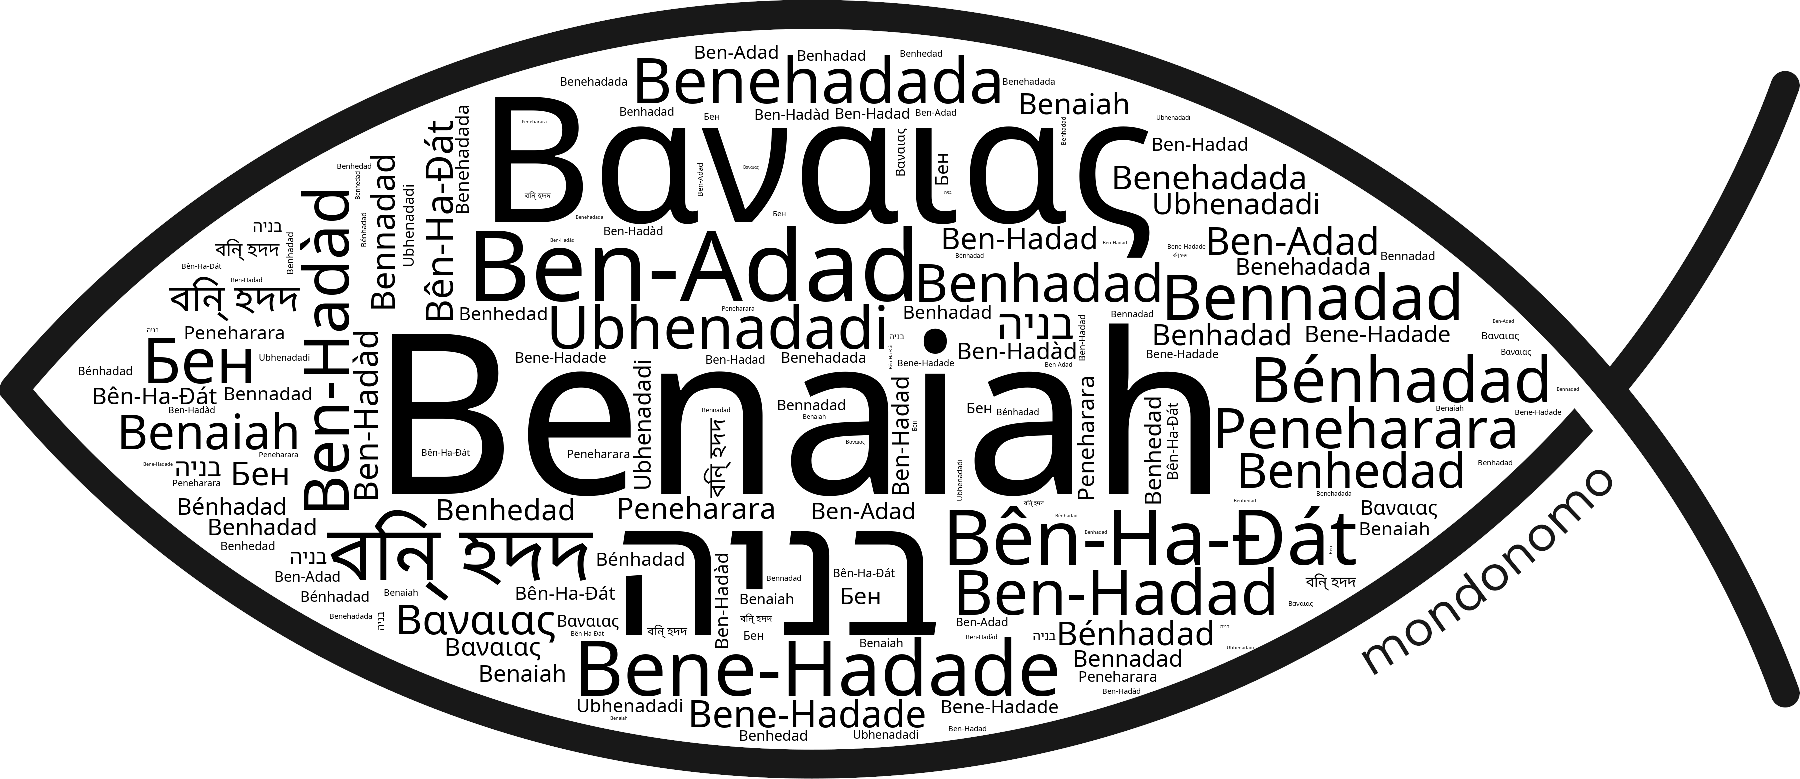 Name Benaiah in the world's Bibles